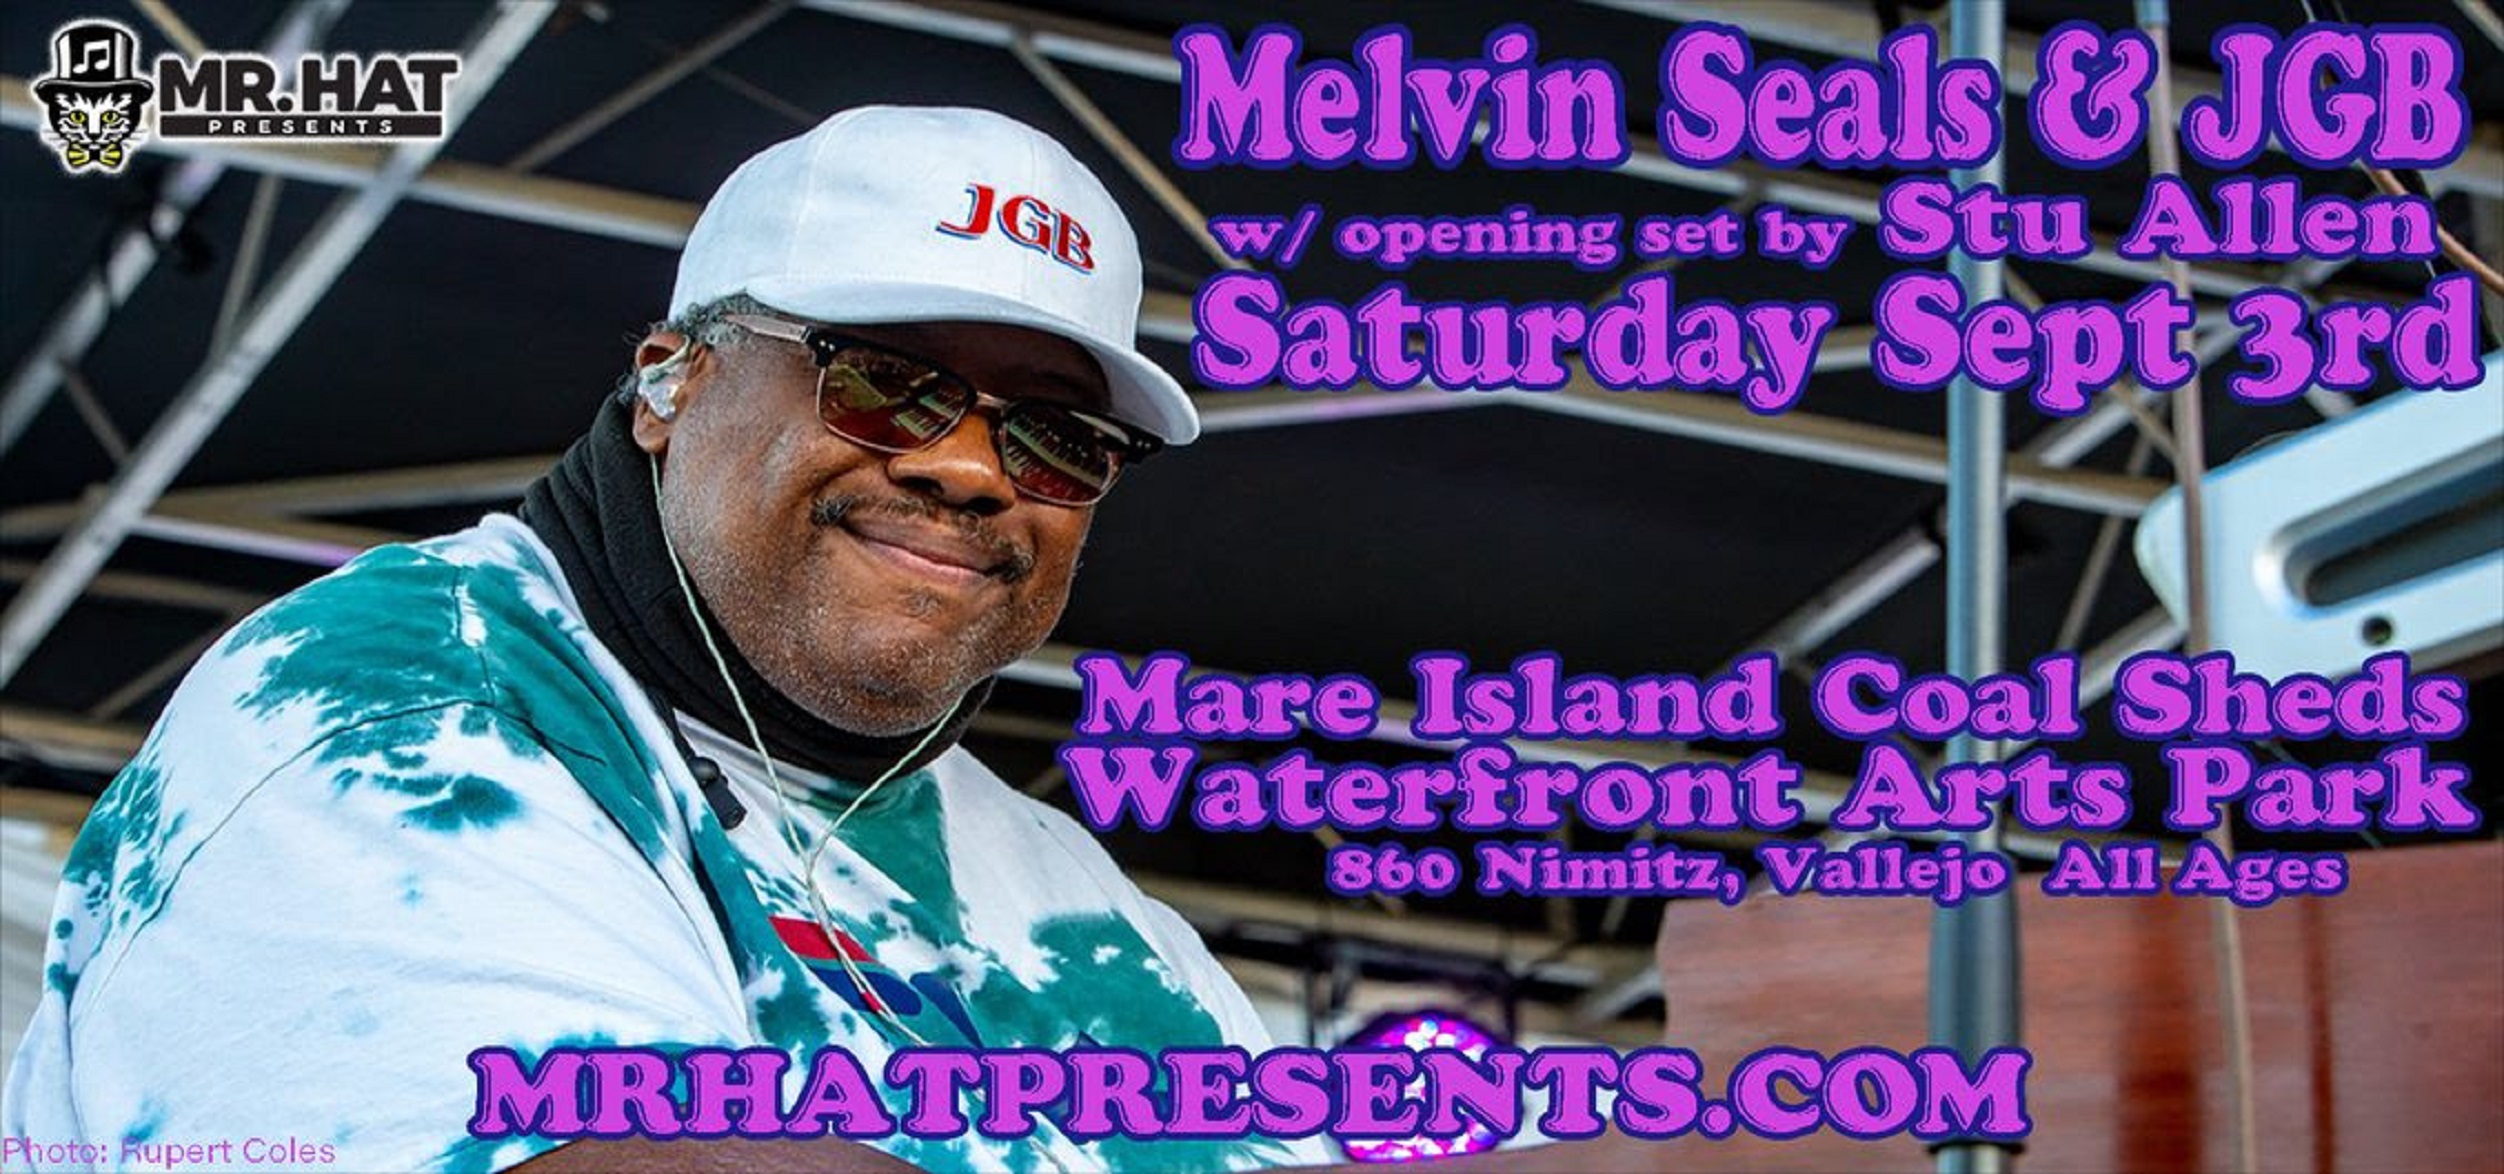 Melvin Seals & JGB + Stu Allen Return to Mare Island Saturday Sept 3rd